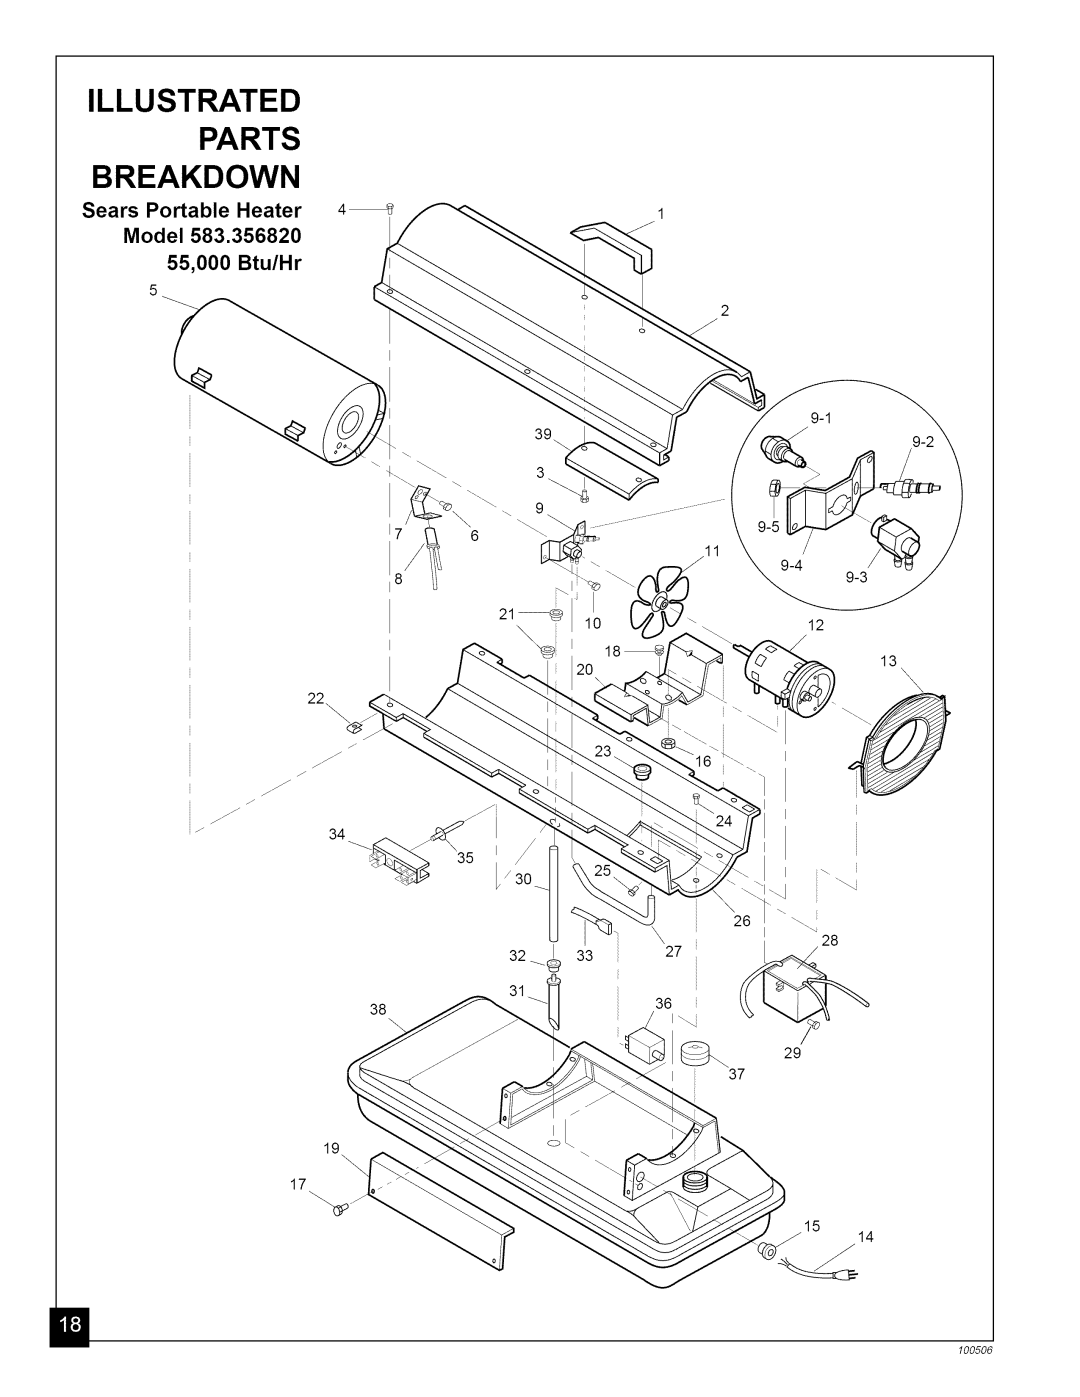 Sears 583.35683, 583.35682, 583.3565 Sears Portable Heater Model 55,000 Btu/Hr, Illustrated Parts Breakdown, 3836, 10050d 